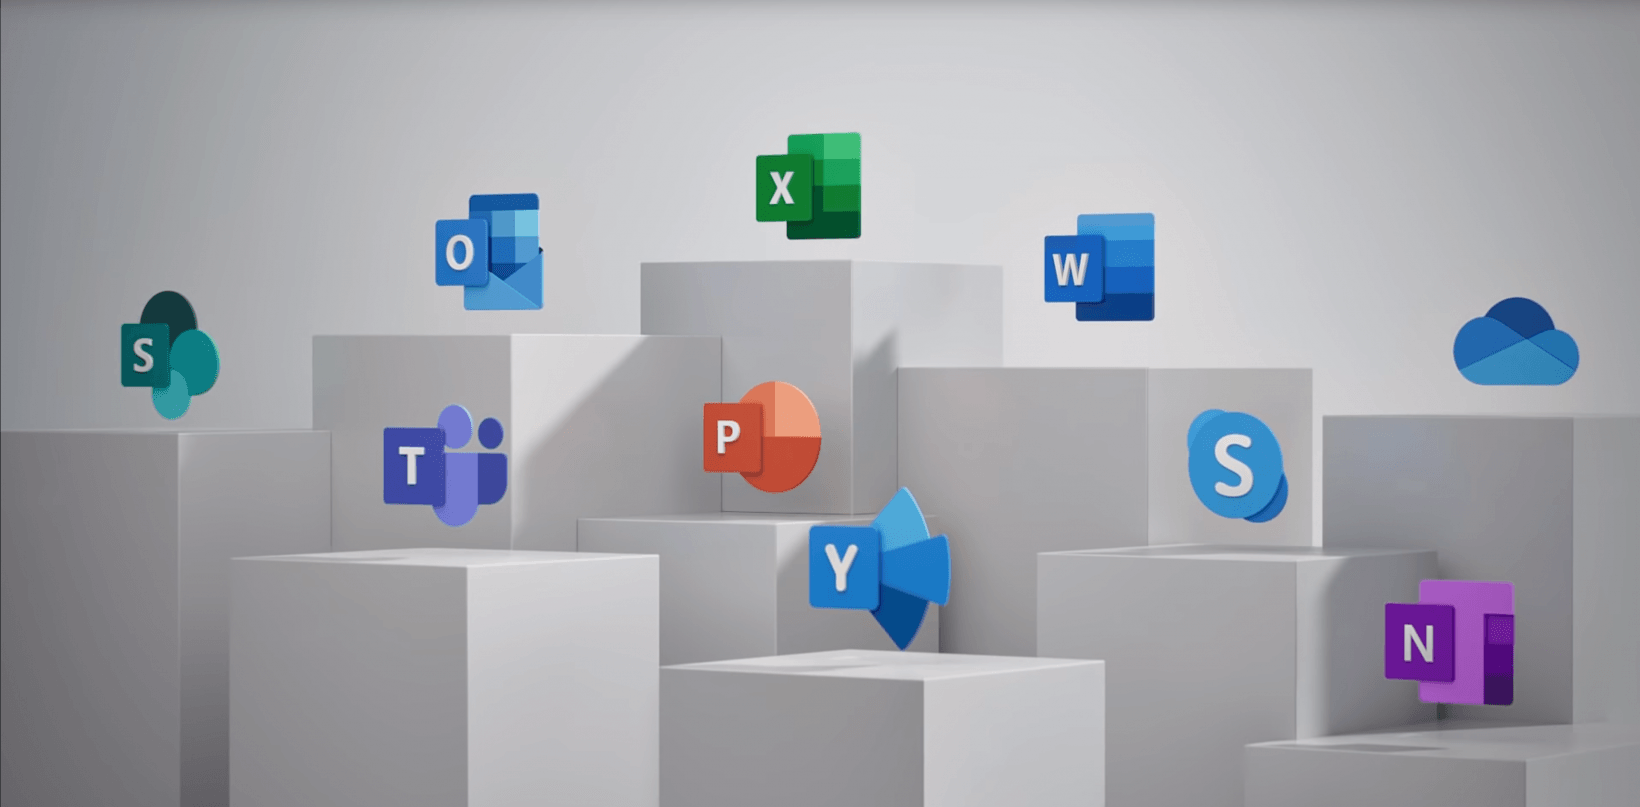 Microsoft Design Logo - Microsoft's new Office logos are a beautiful glimpse of the future